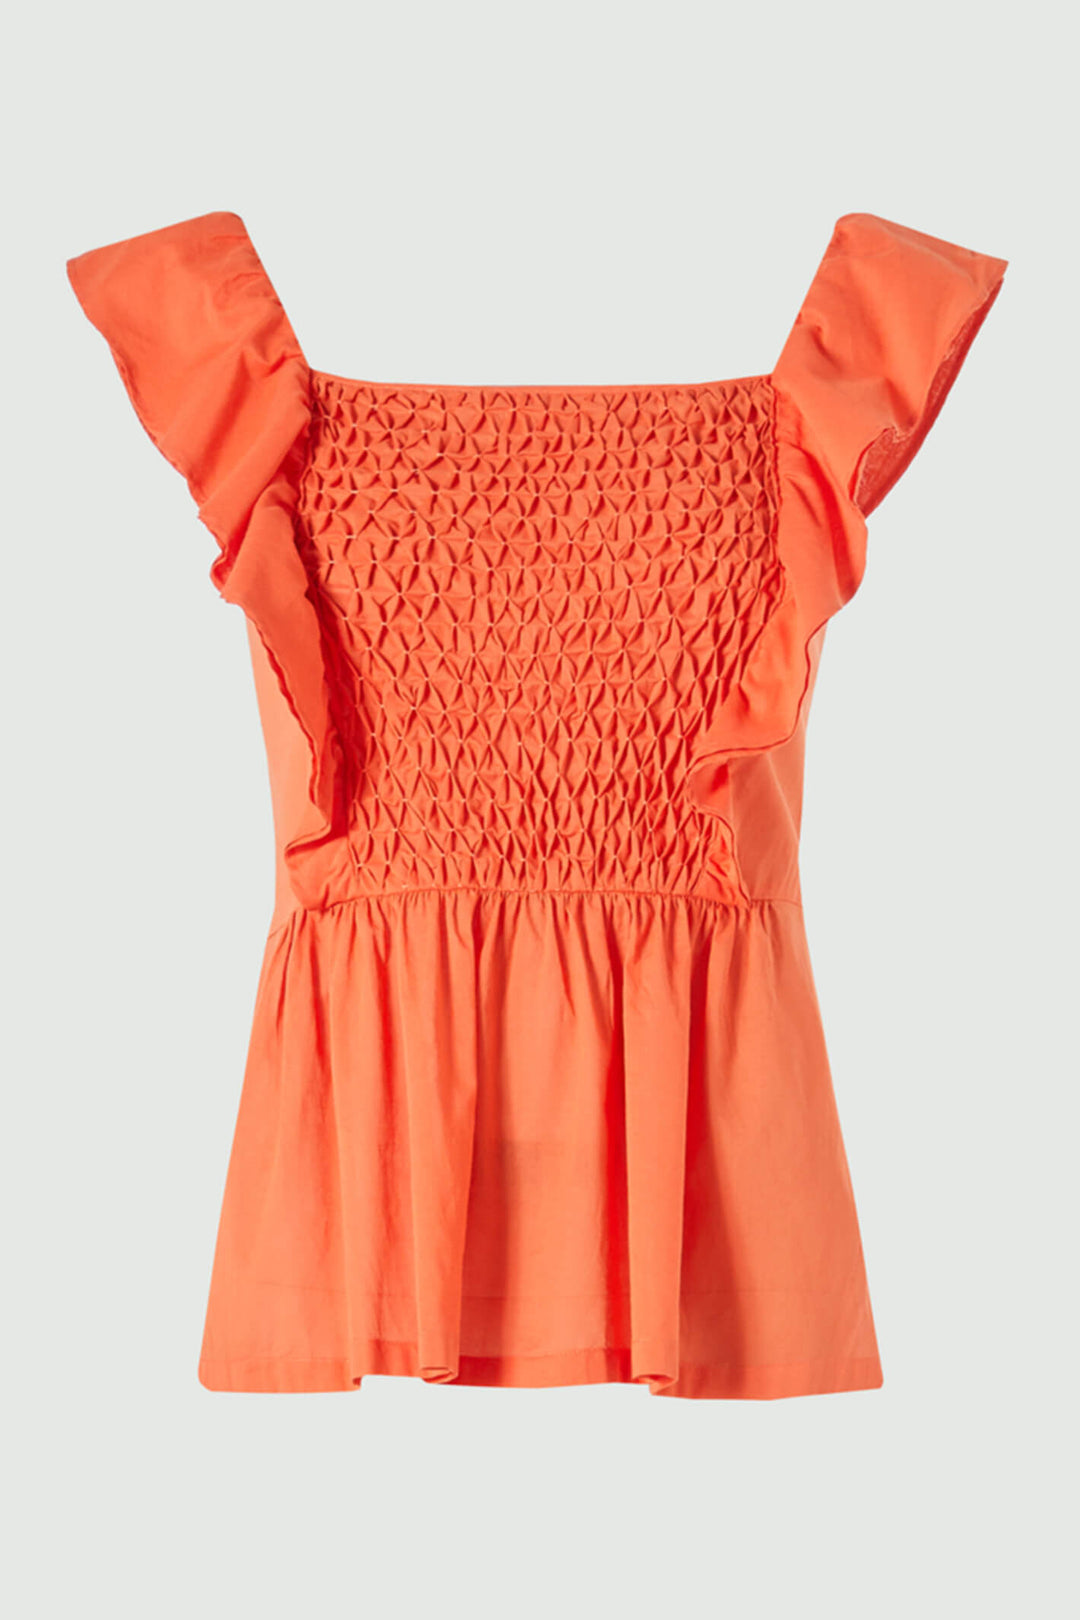 Marella Artemio 31610622200 Orange Ruffle Top - Olivia Grace Fashion